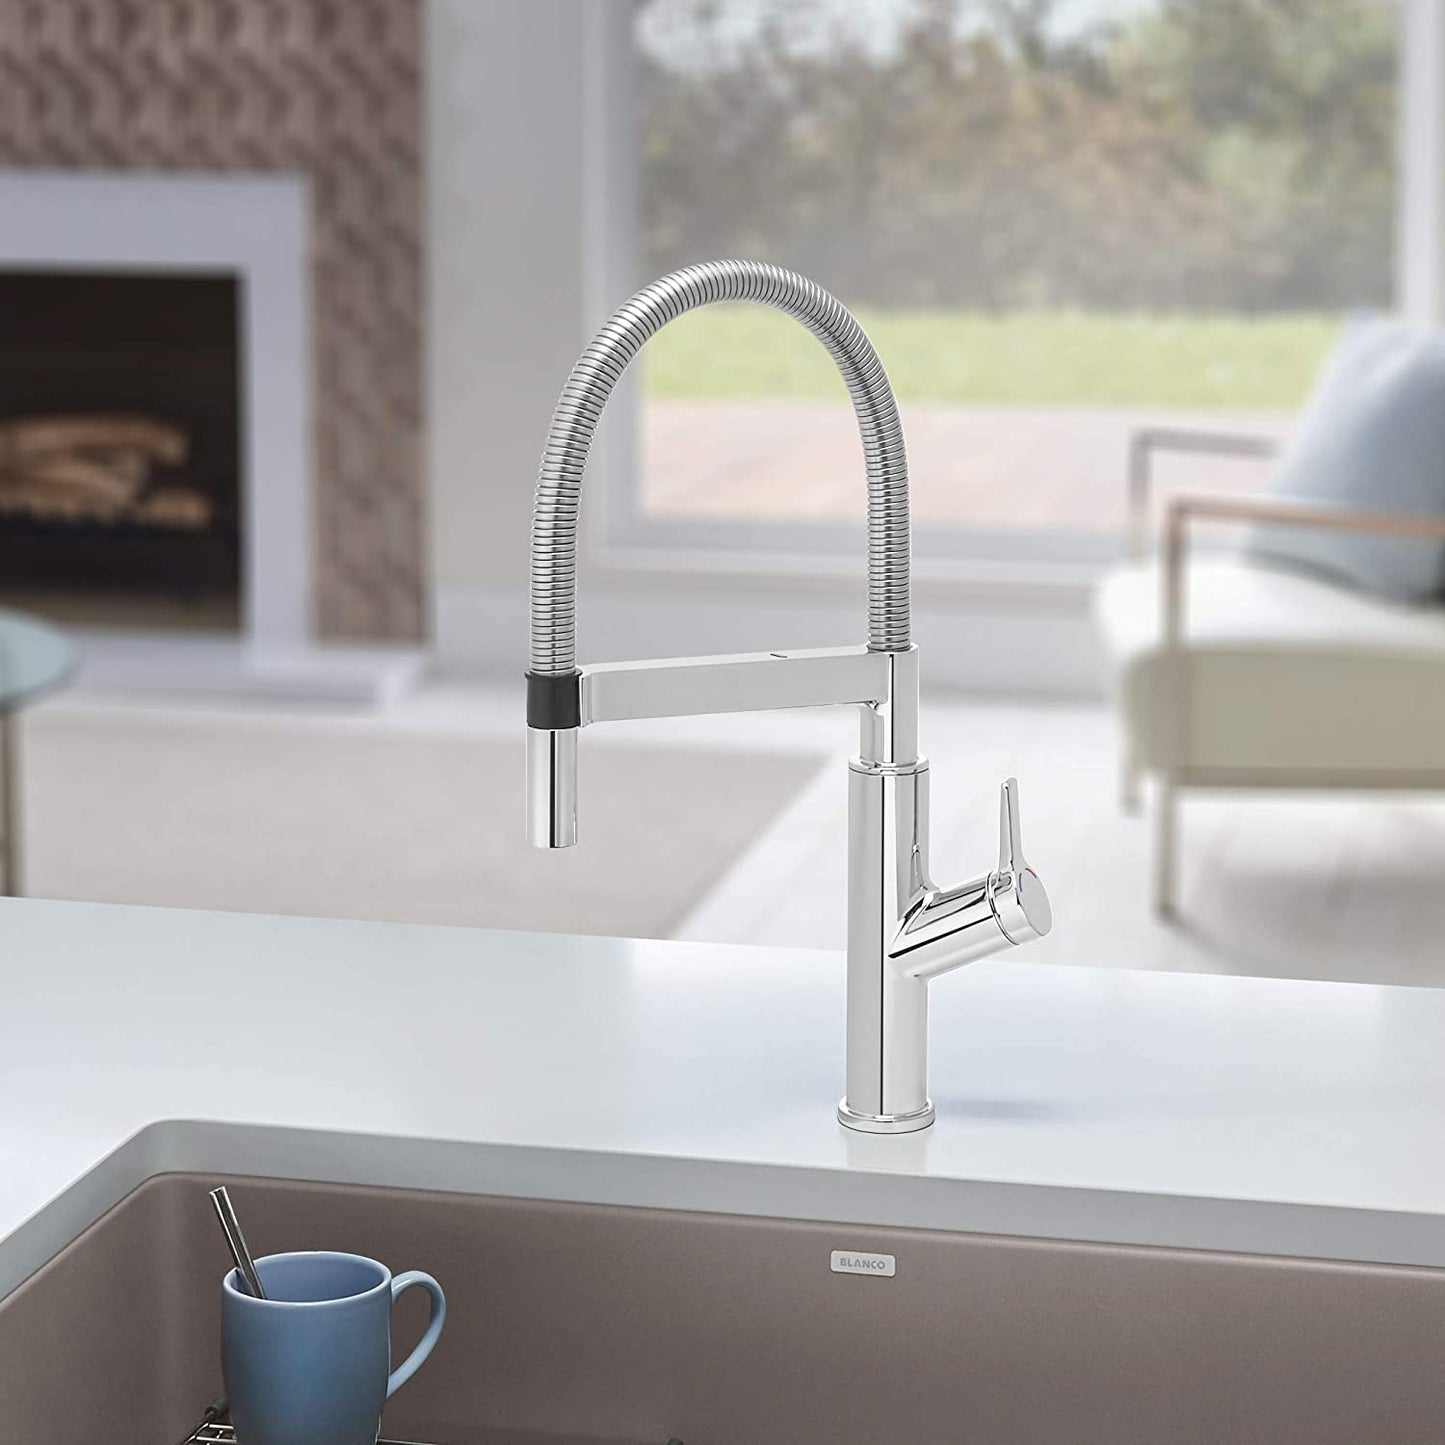 Solenta Senso Mini 1.5 gpm Kitchen Faucet with Sensor Technology - Chrome